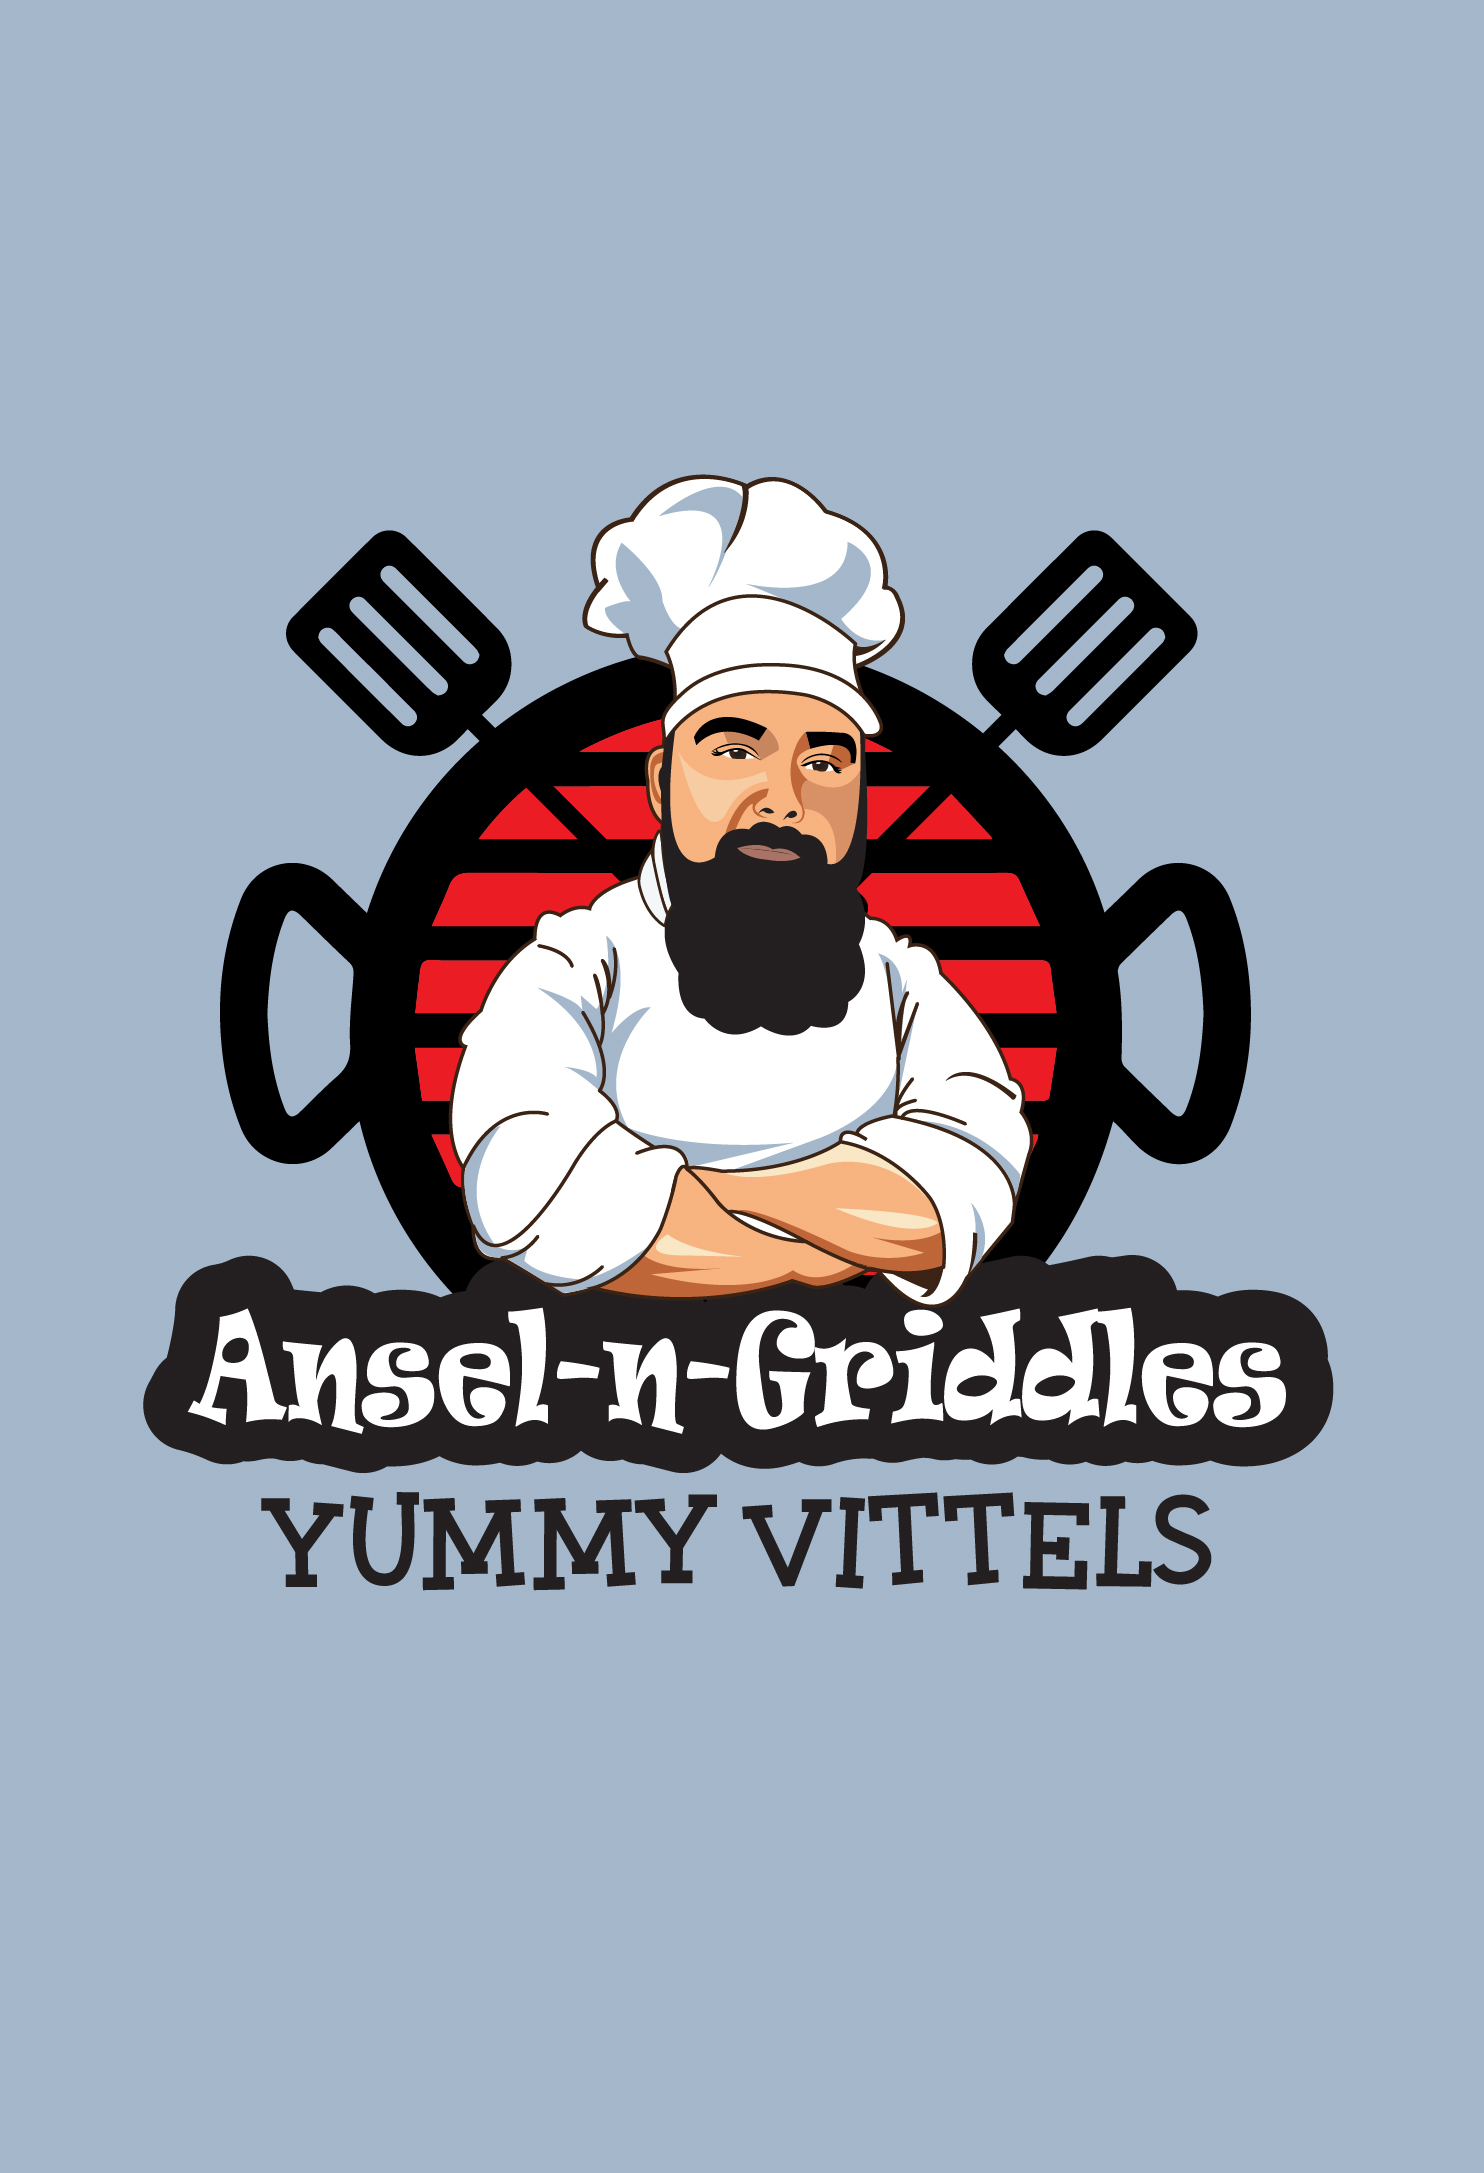 Ansel-n-Griddles Logo